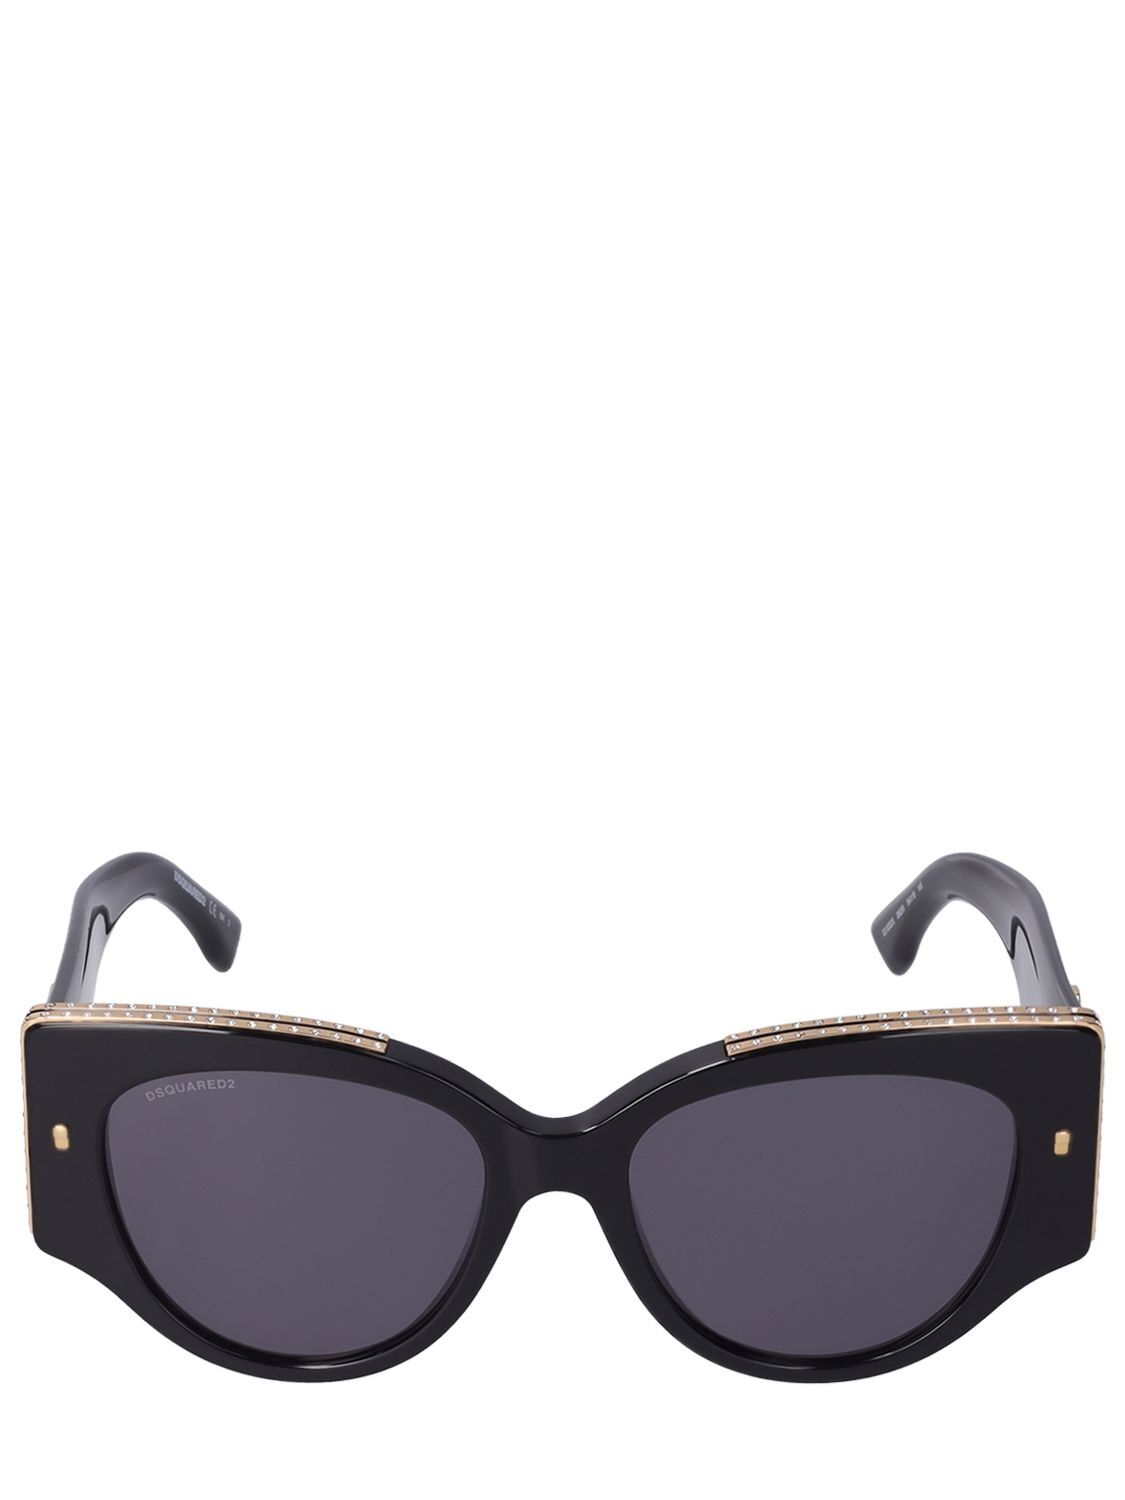 DSQUARED2 D2 Cat-eye Acetate Sunglasses in black / grey